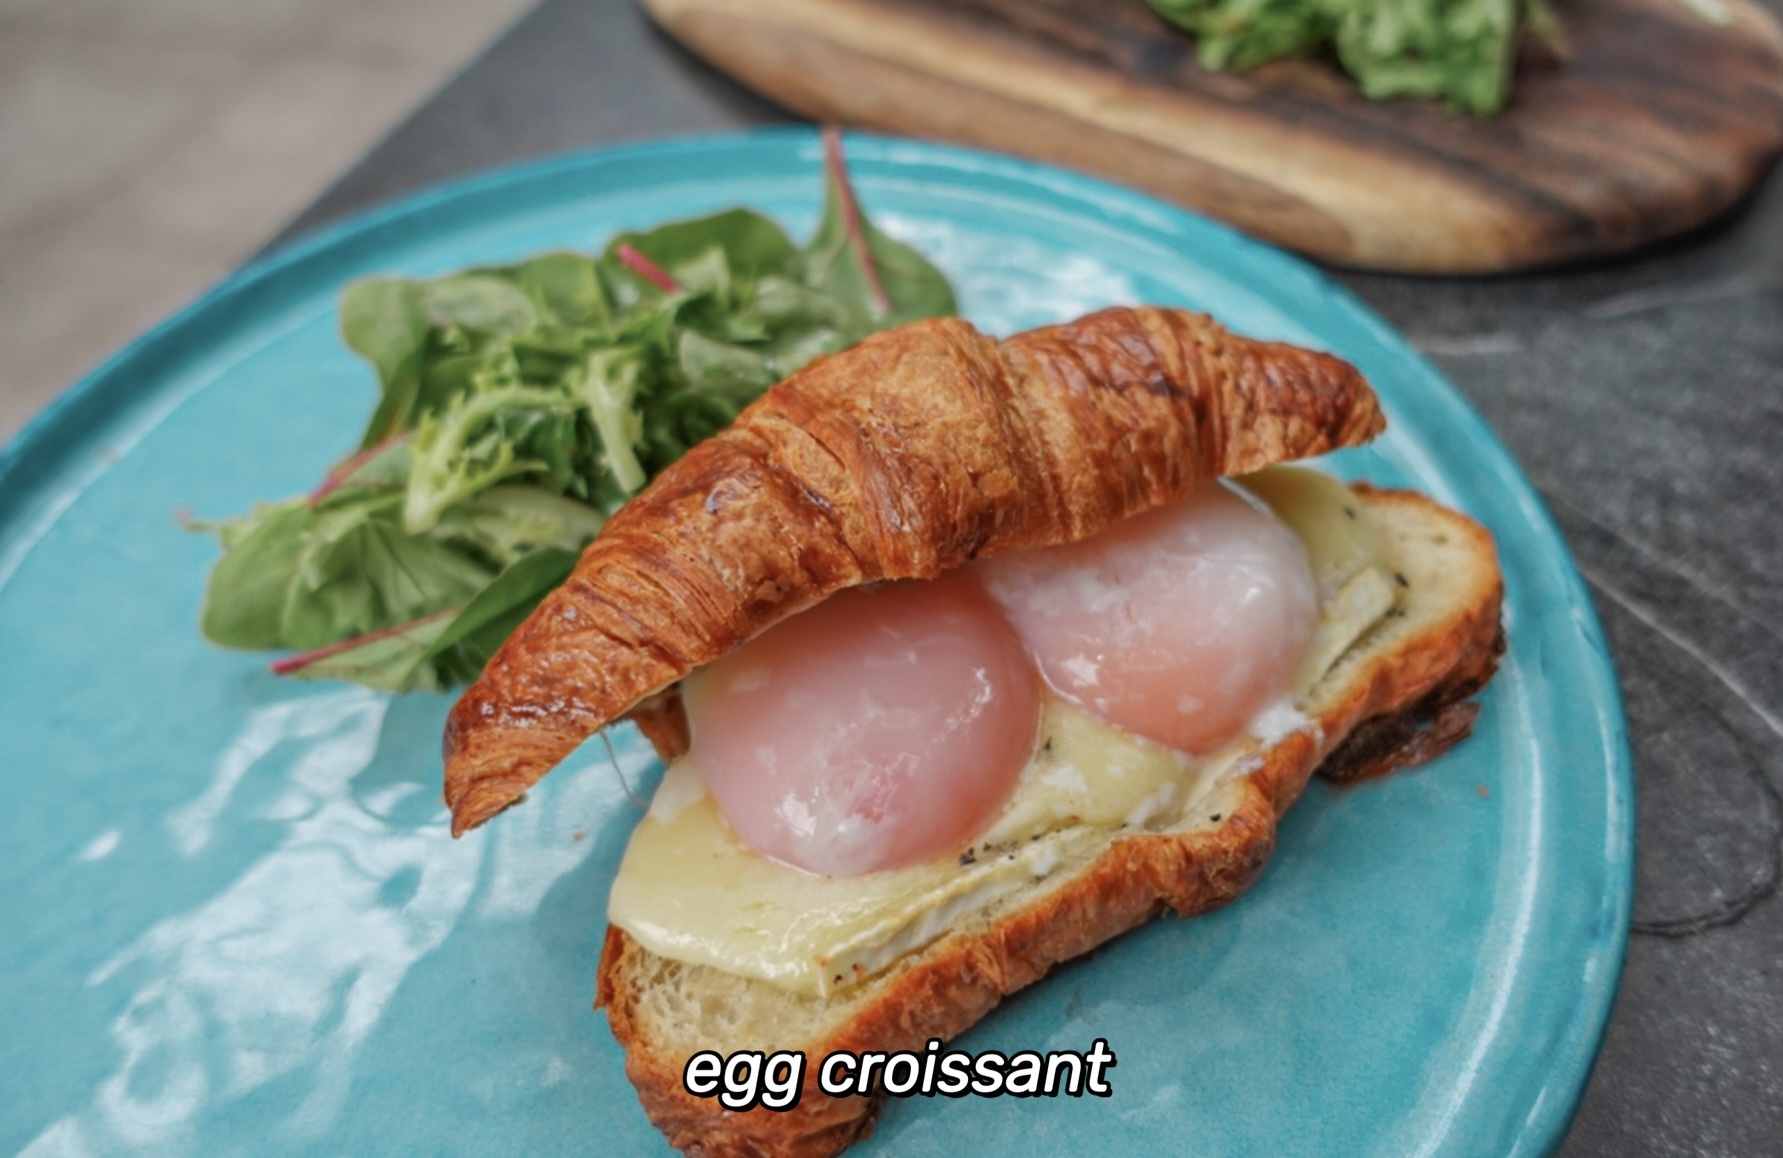 wildseed-cafe-egg-croissant